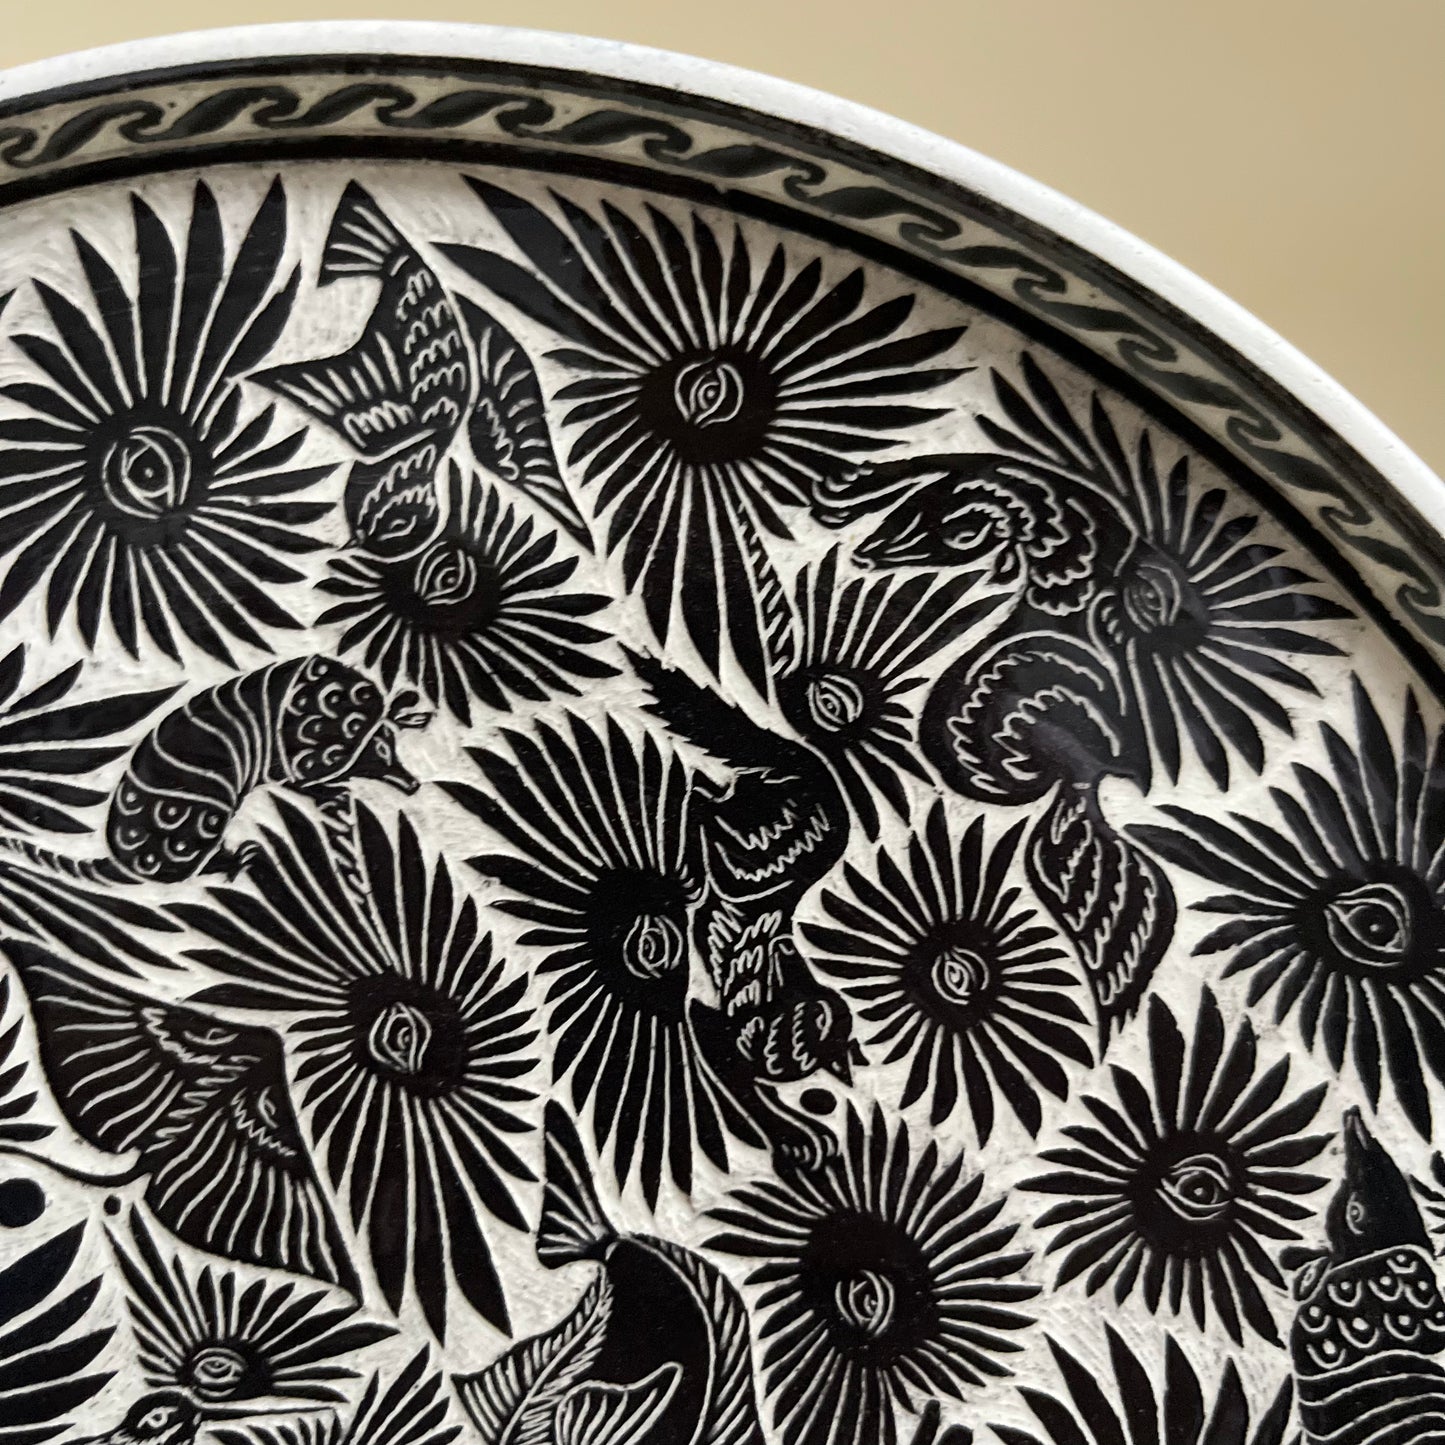 Mixteca Ceramic Plate by Juan Rodriguez